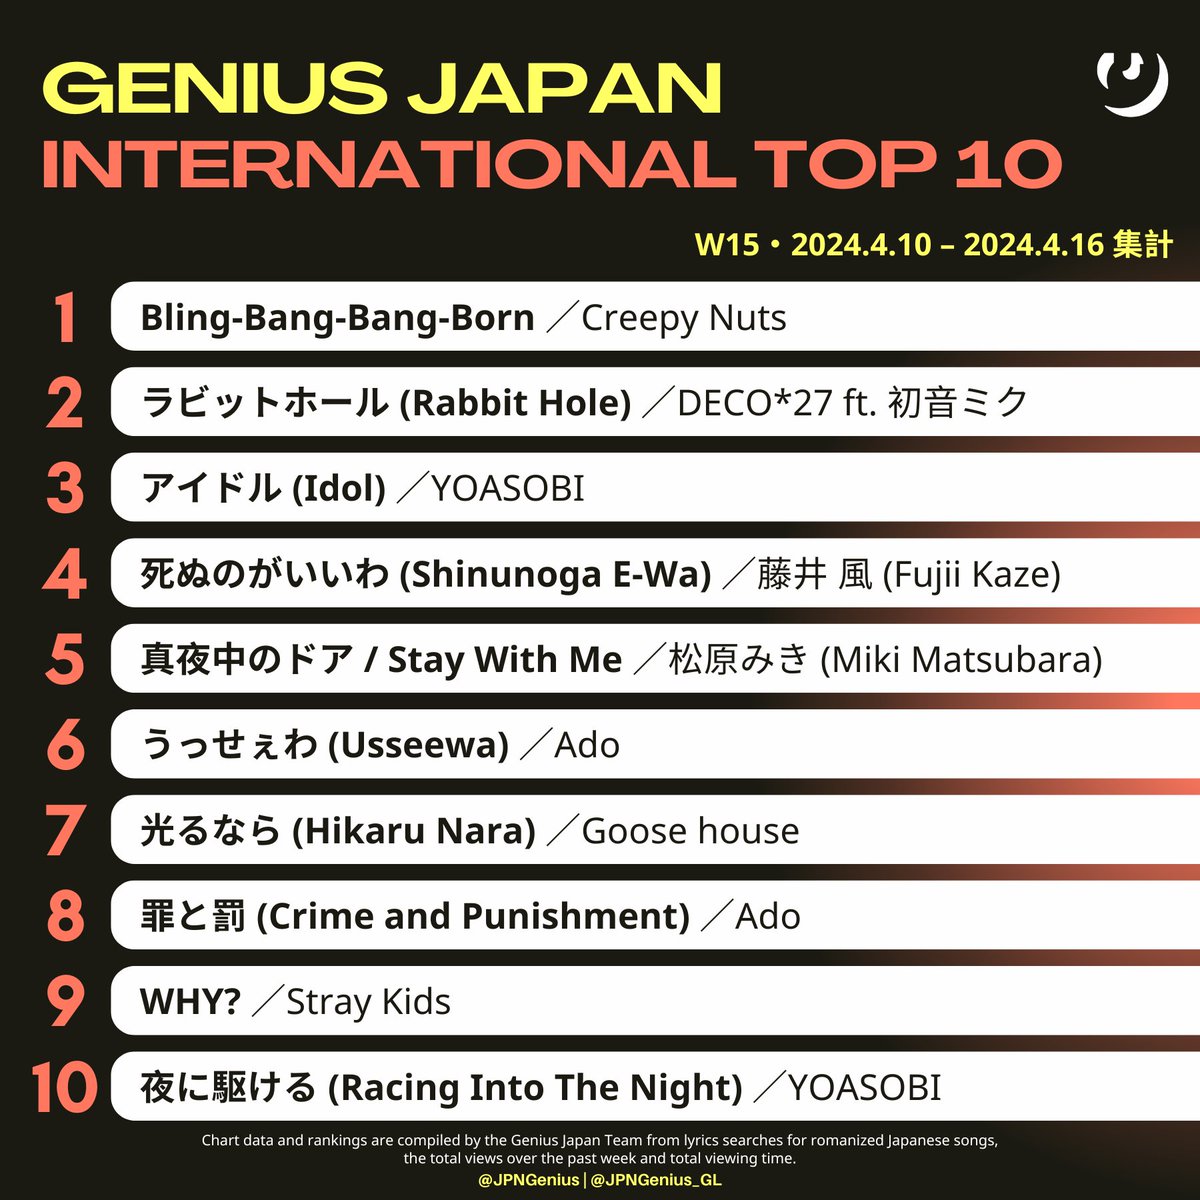 #GeniusCharts | Announcing this week's @Genius Japan INTERNATIONAL TOP 10 Chart (Dated Apr 10–16, 2024／W15) 🥇Creepy Nuts - 'Bling-Bang-Bang-Born' 🥈DECO27 ft. Hatsune Miku - 'Rabbit Hole' 🥉YOASOBI - 'Idol'